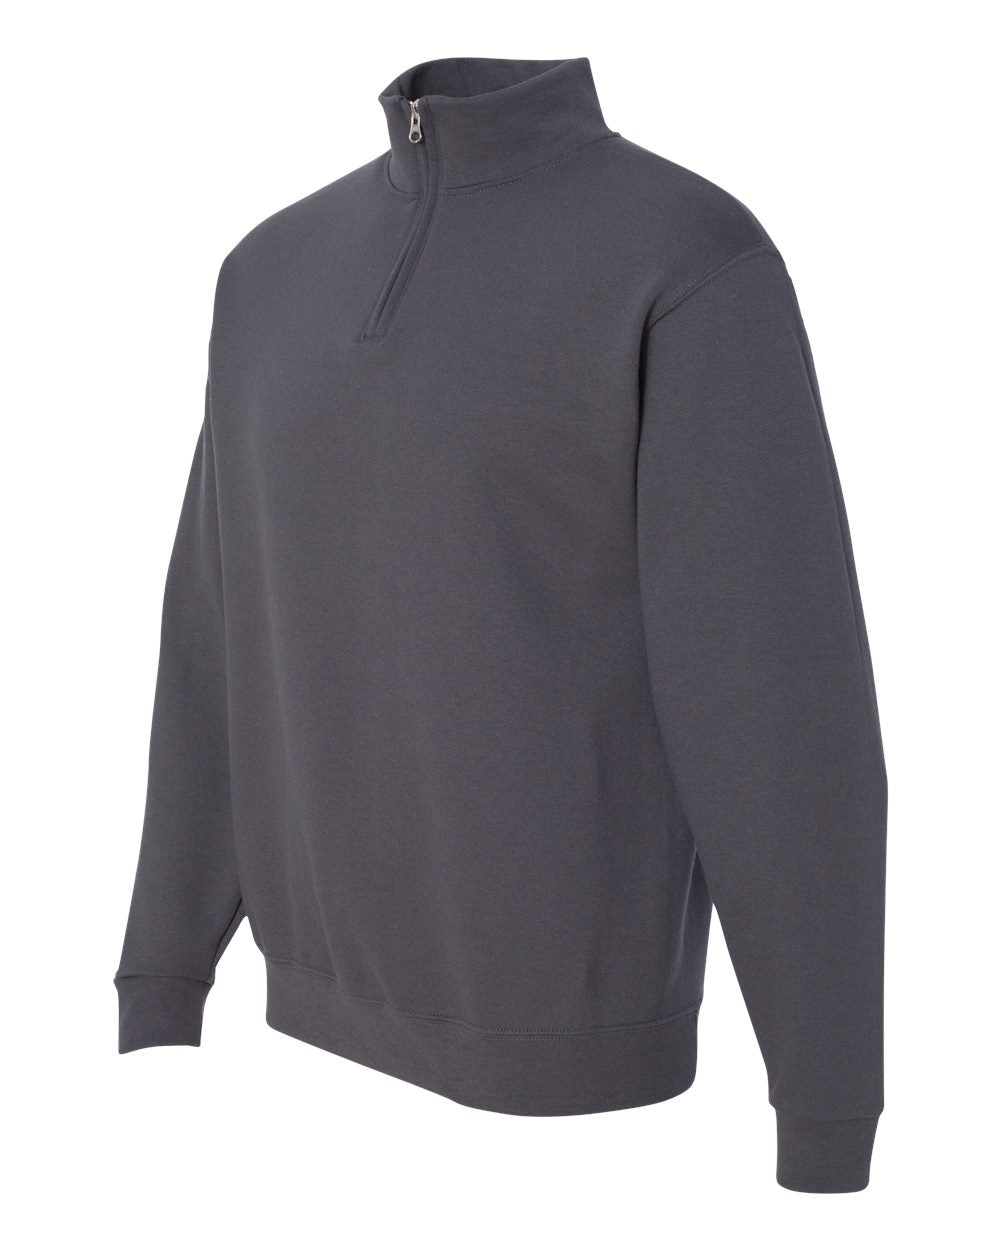 Personalized Embroidered Cadet Collar Quarter-Zip Sweatshirt